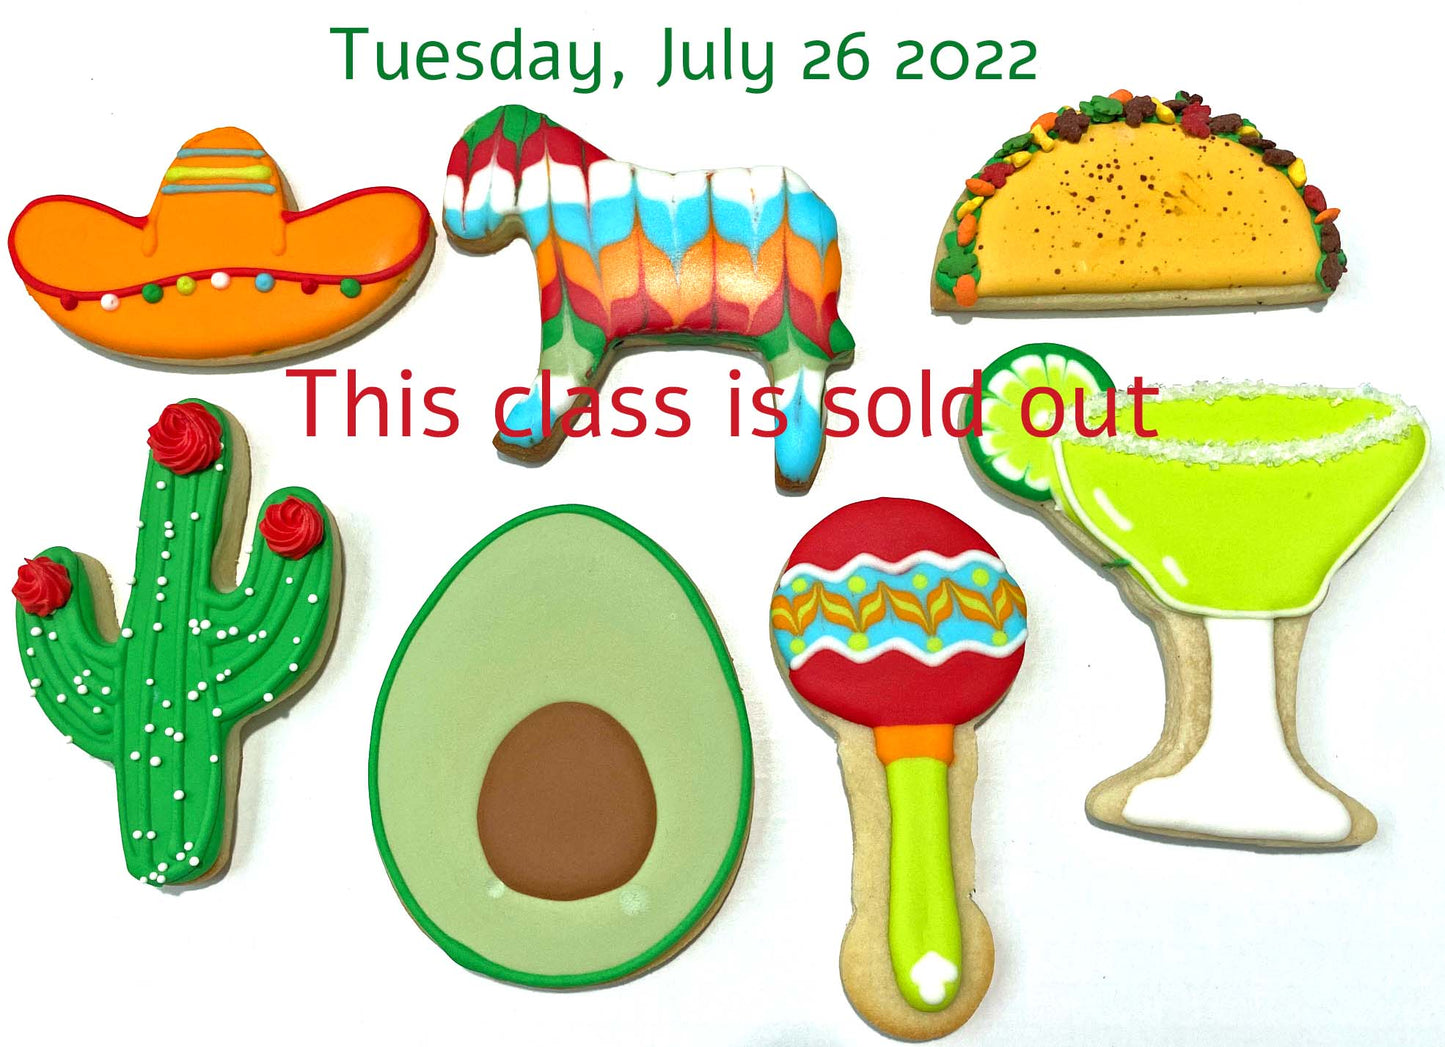 Tuesday 7/26/2022: Sugar Cookie Decorating class - Fiesta Theme (Please read class details below)